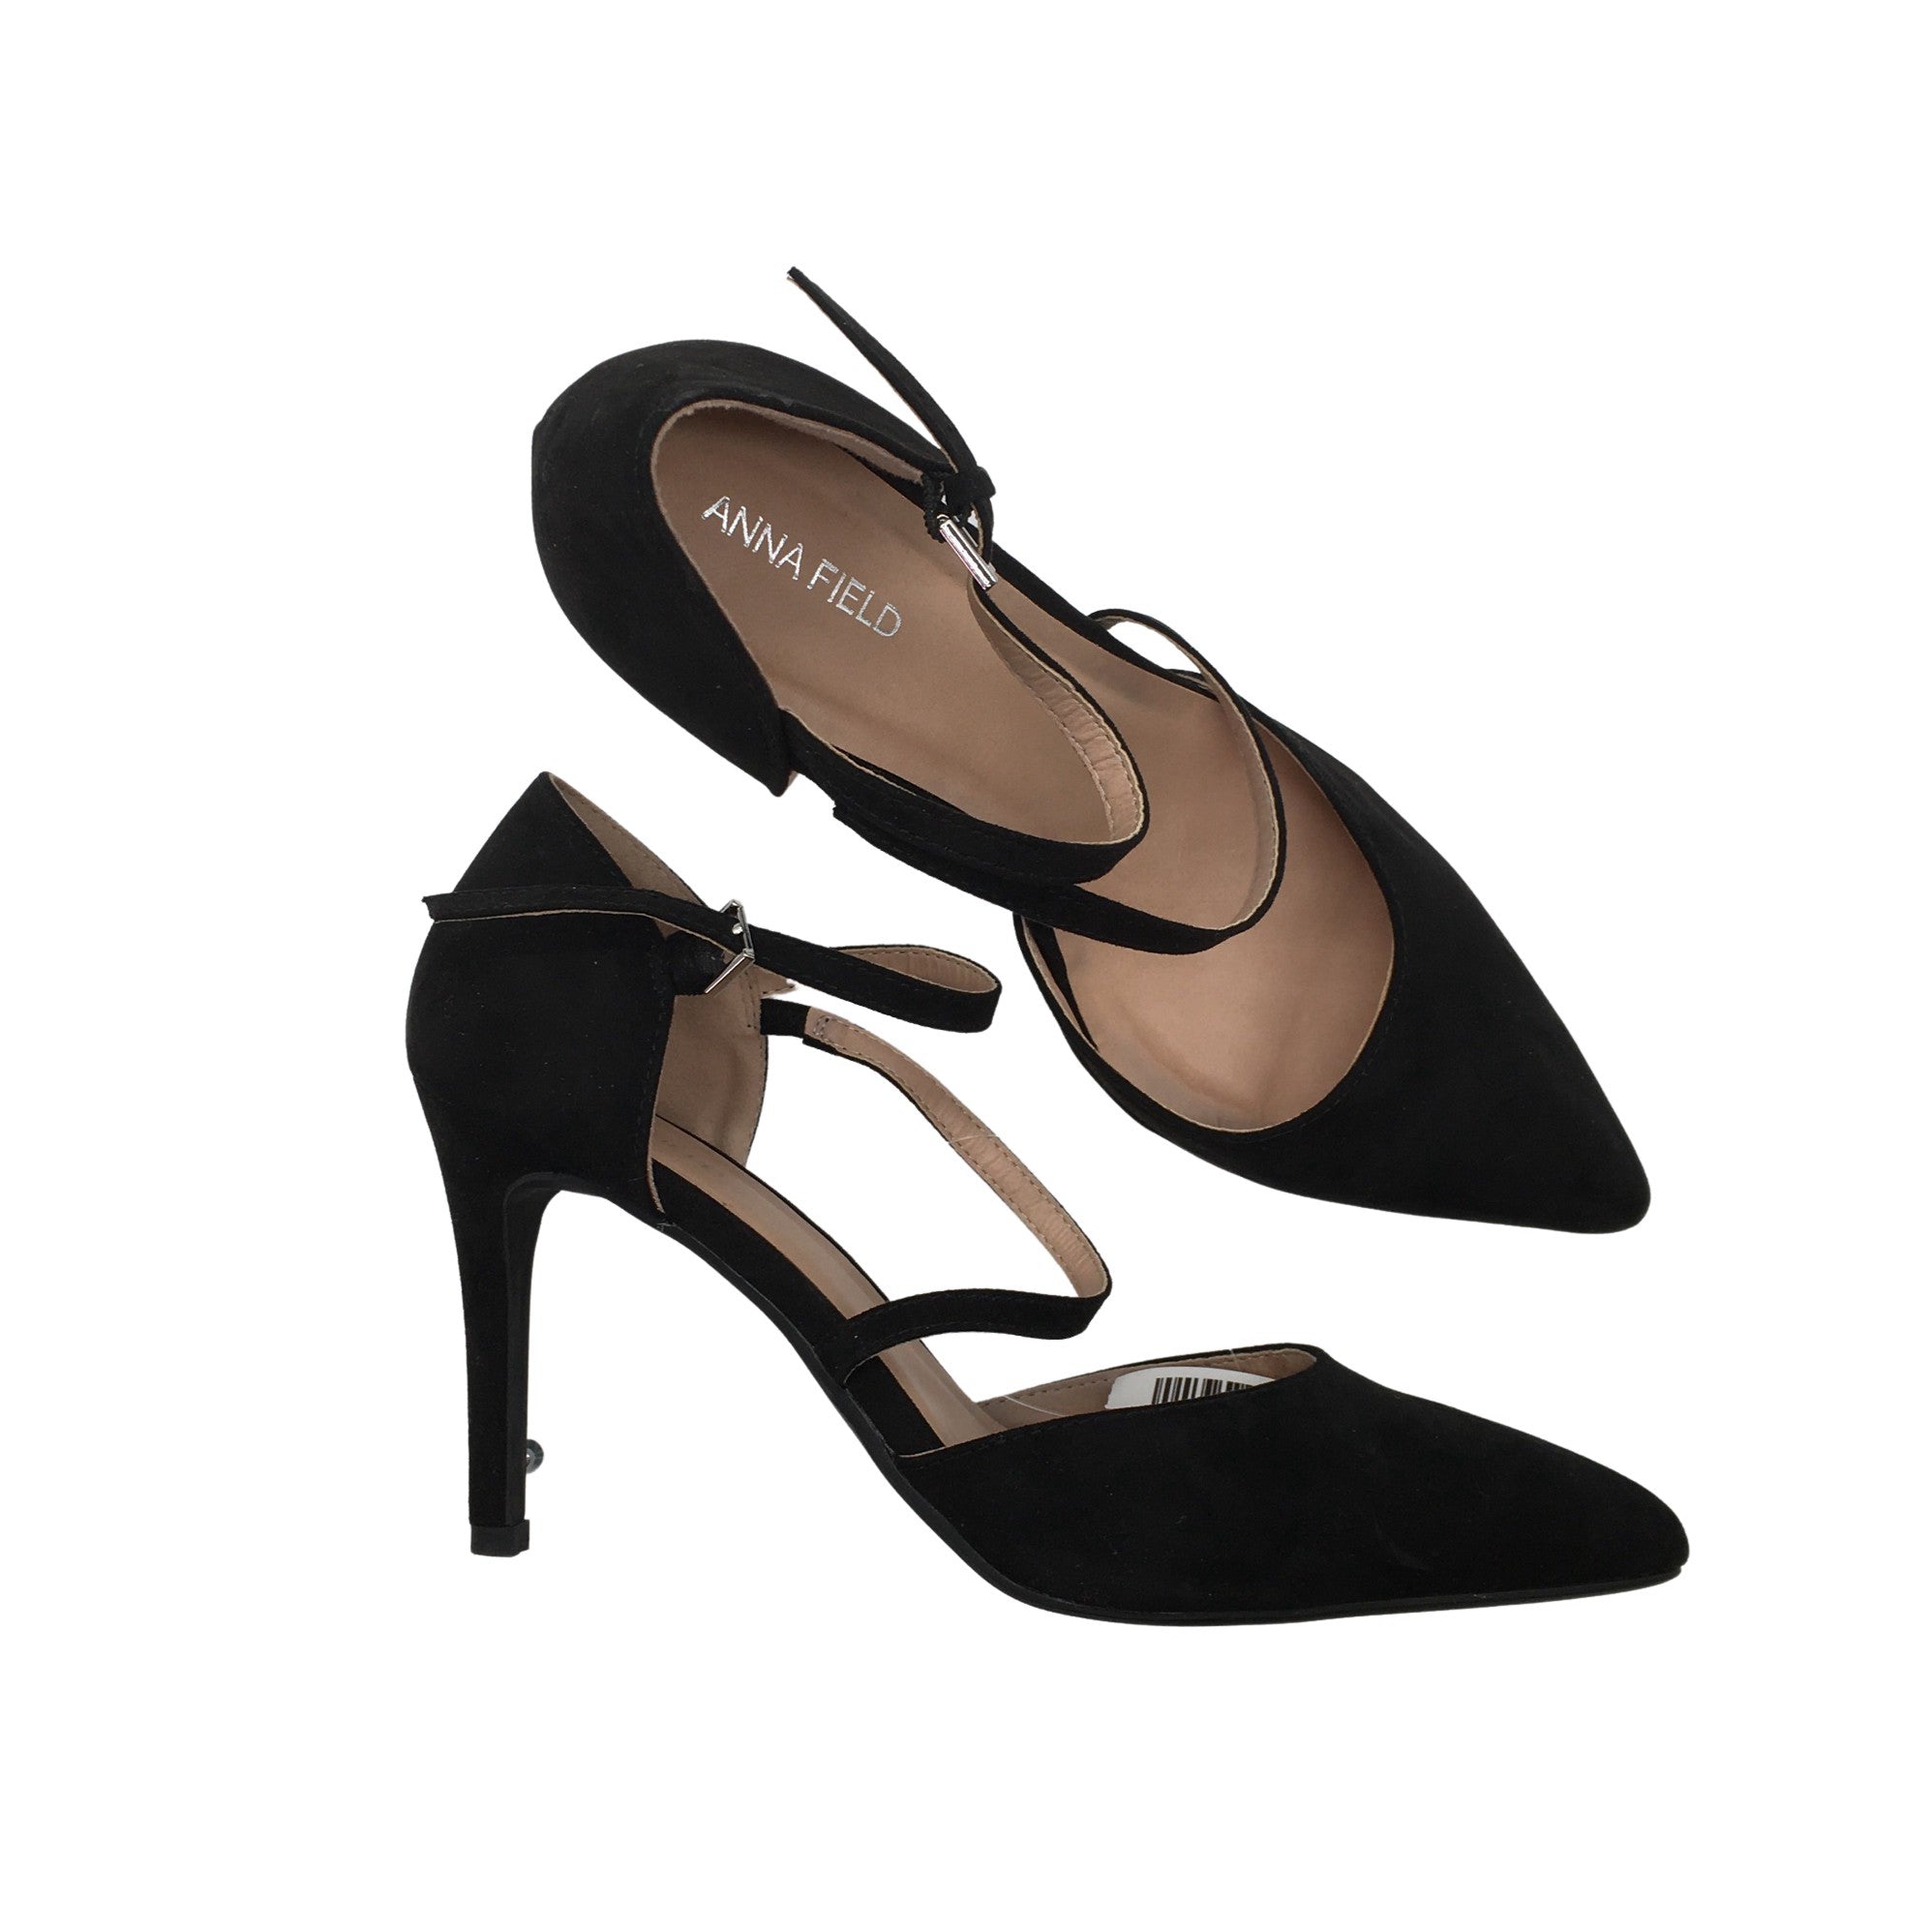 Women's Anna Field High heels, size 42 (Black)